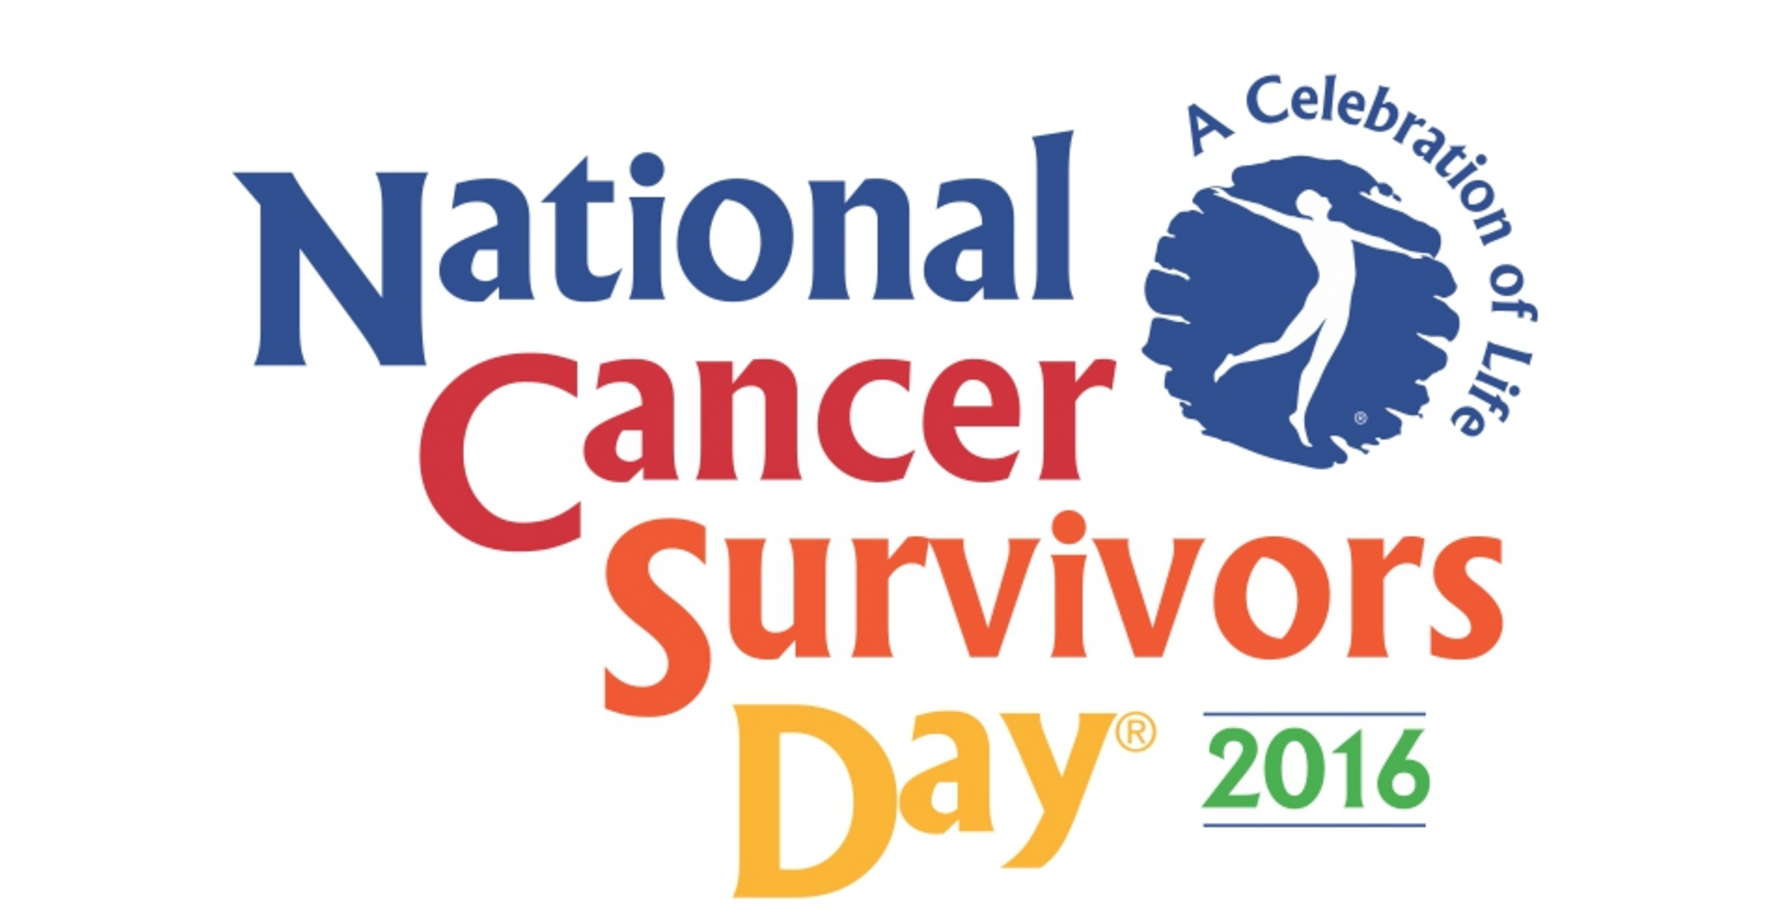 National Cancer Survivors Day 2016